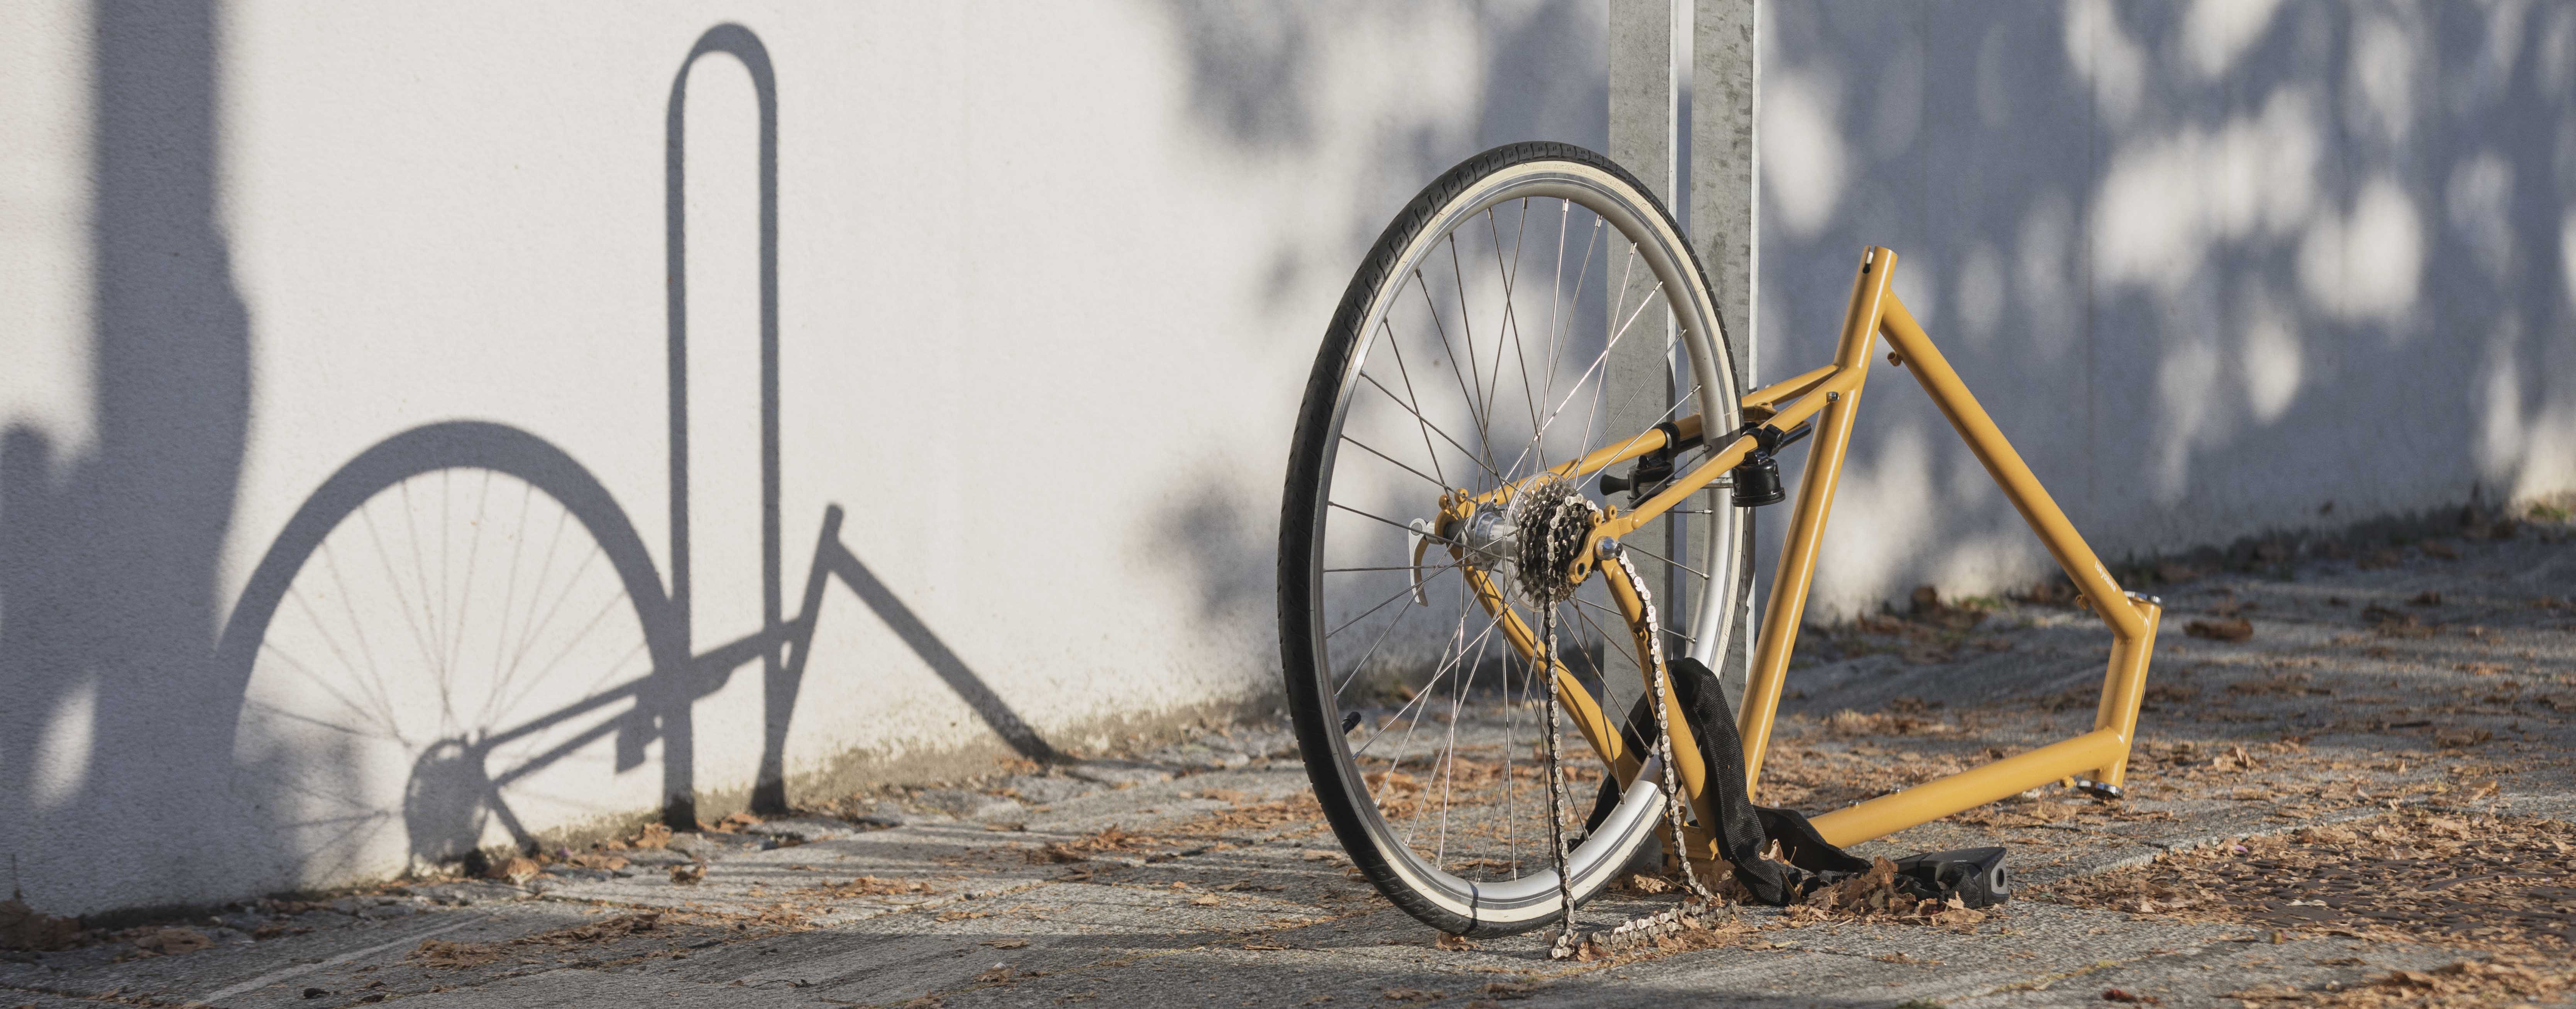 Og så videre mave Underlegen Cykelforsikring | Er din cykel forsikret? | Topdanmark